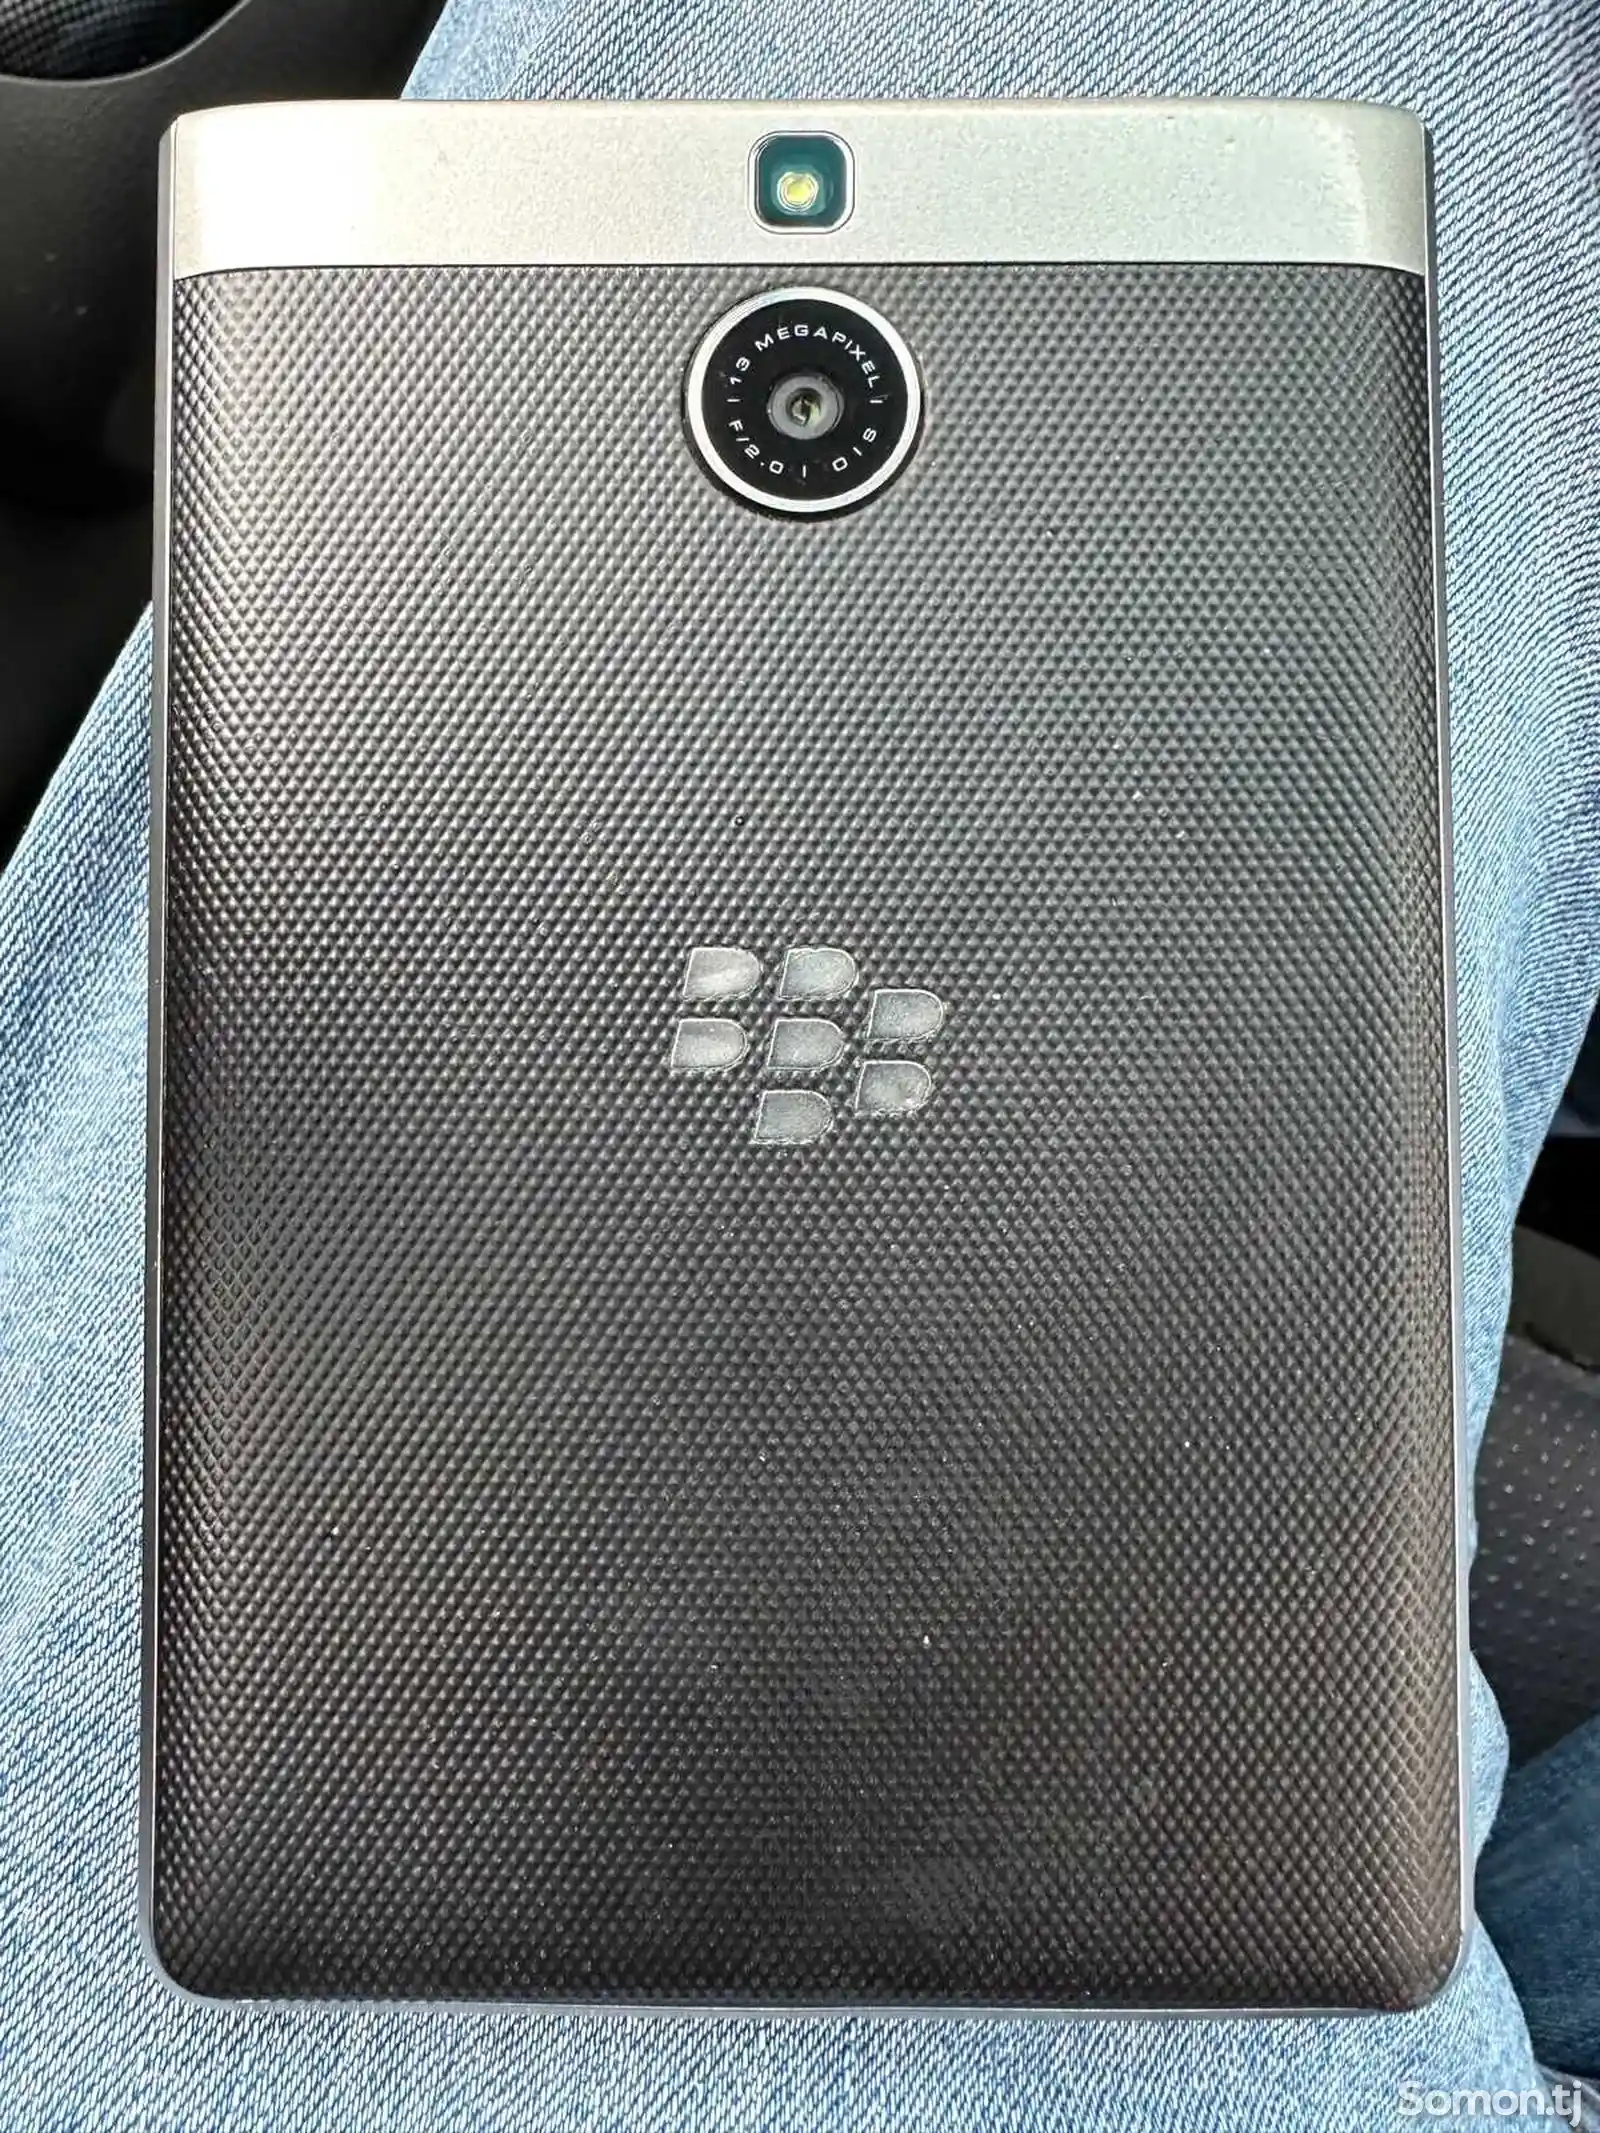 Blackberry Passport, Silver edition-2